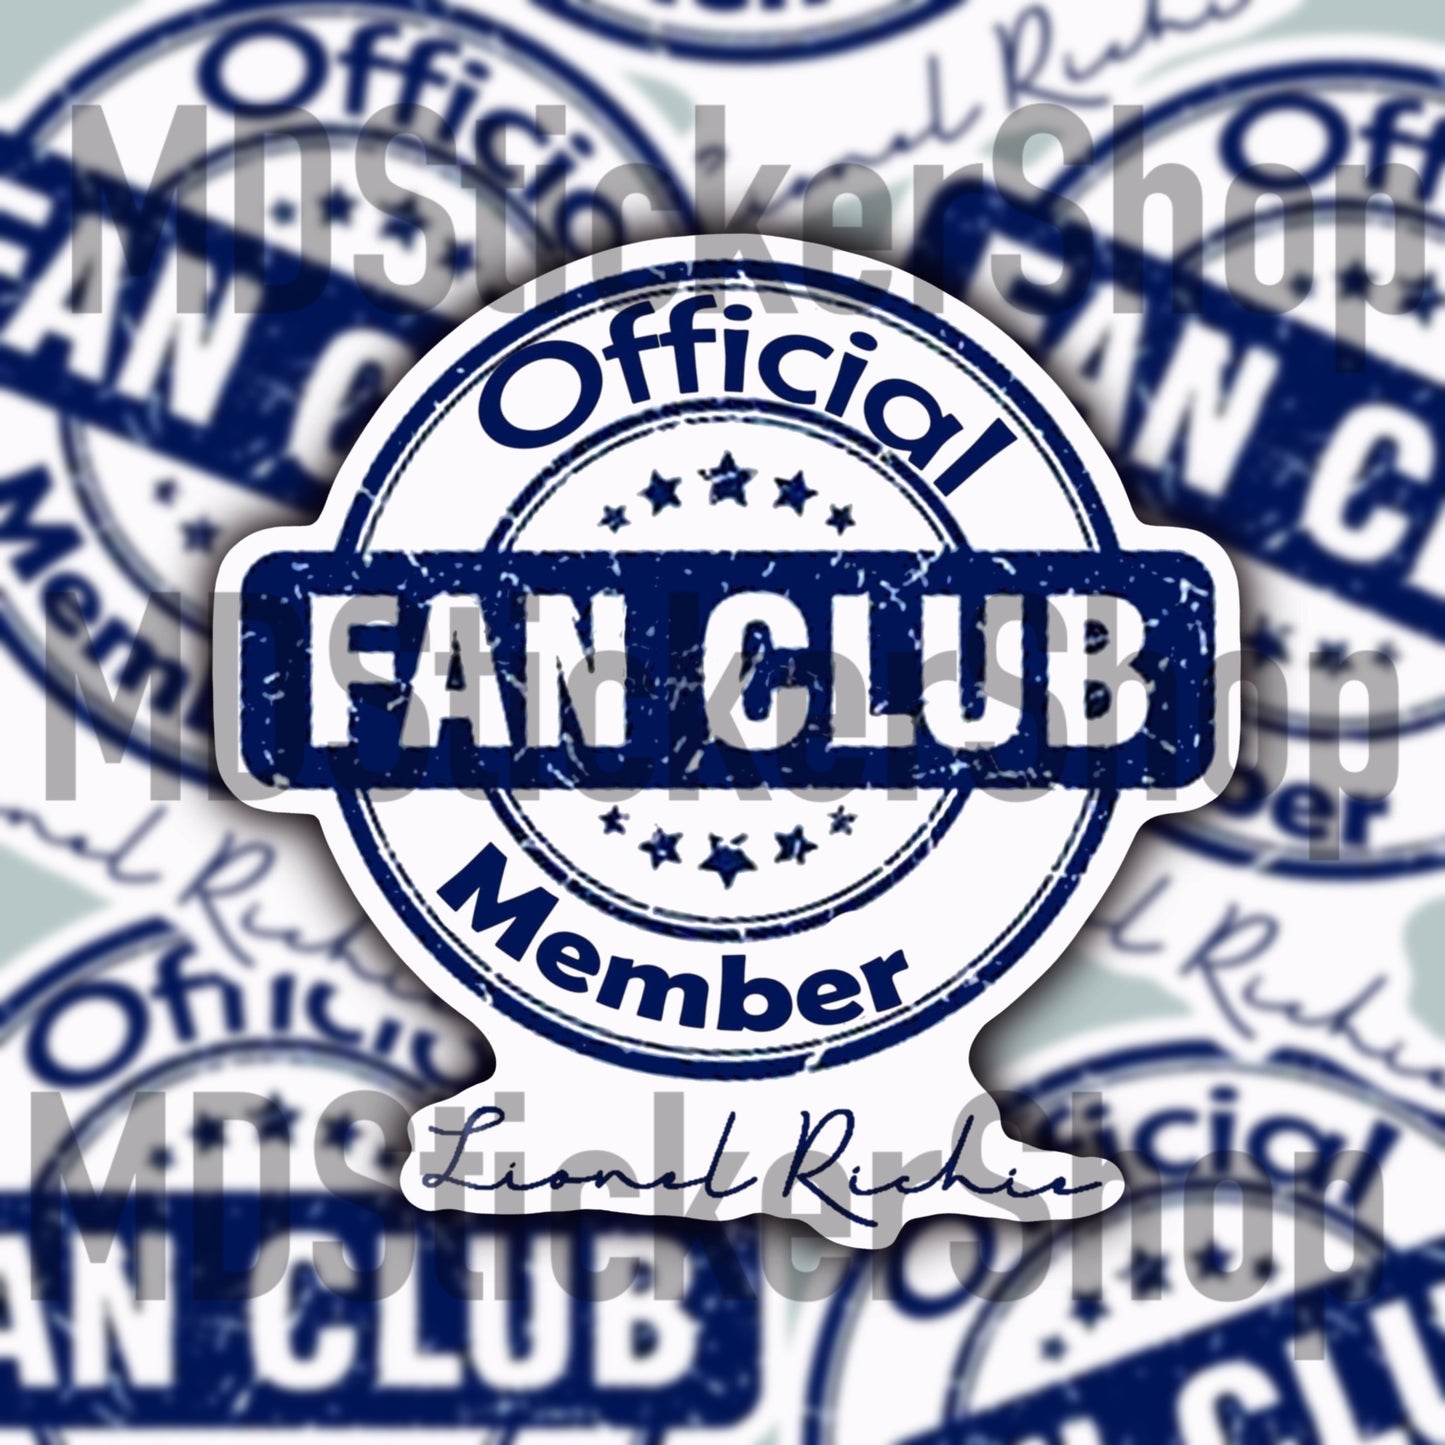 Lionel Richie “Official Fan Club Member” Vinyl Sticker